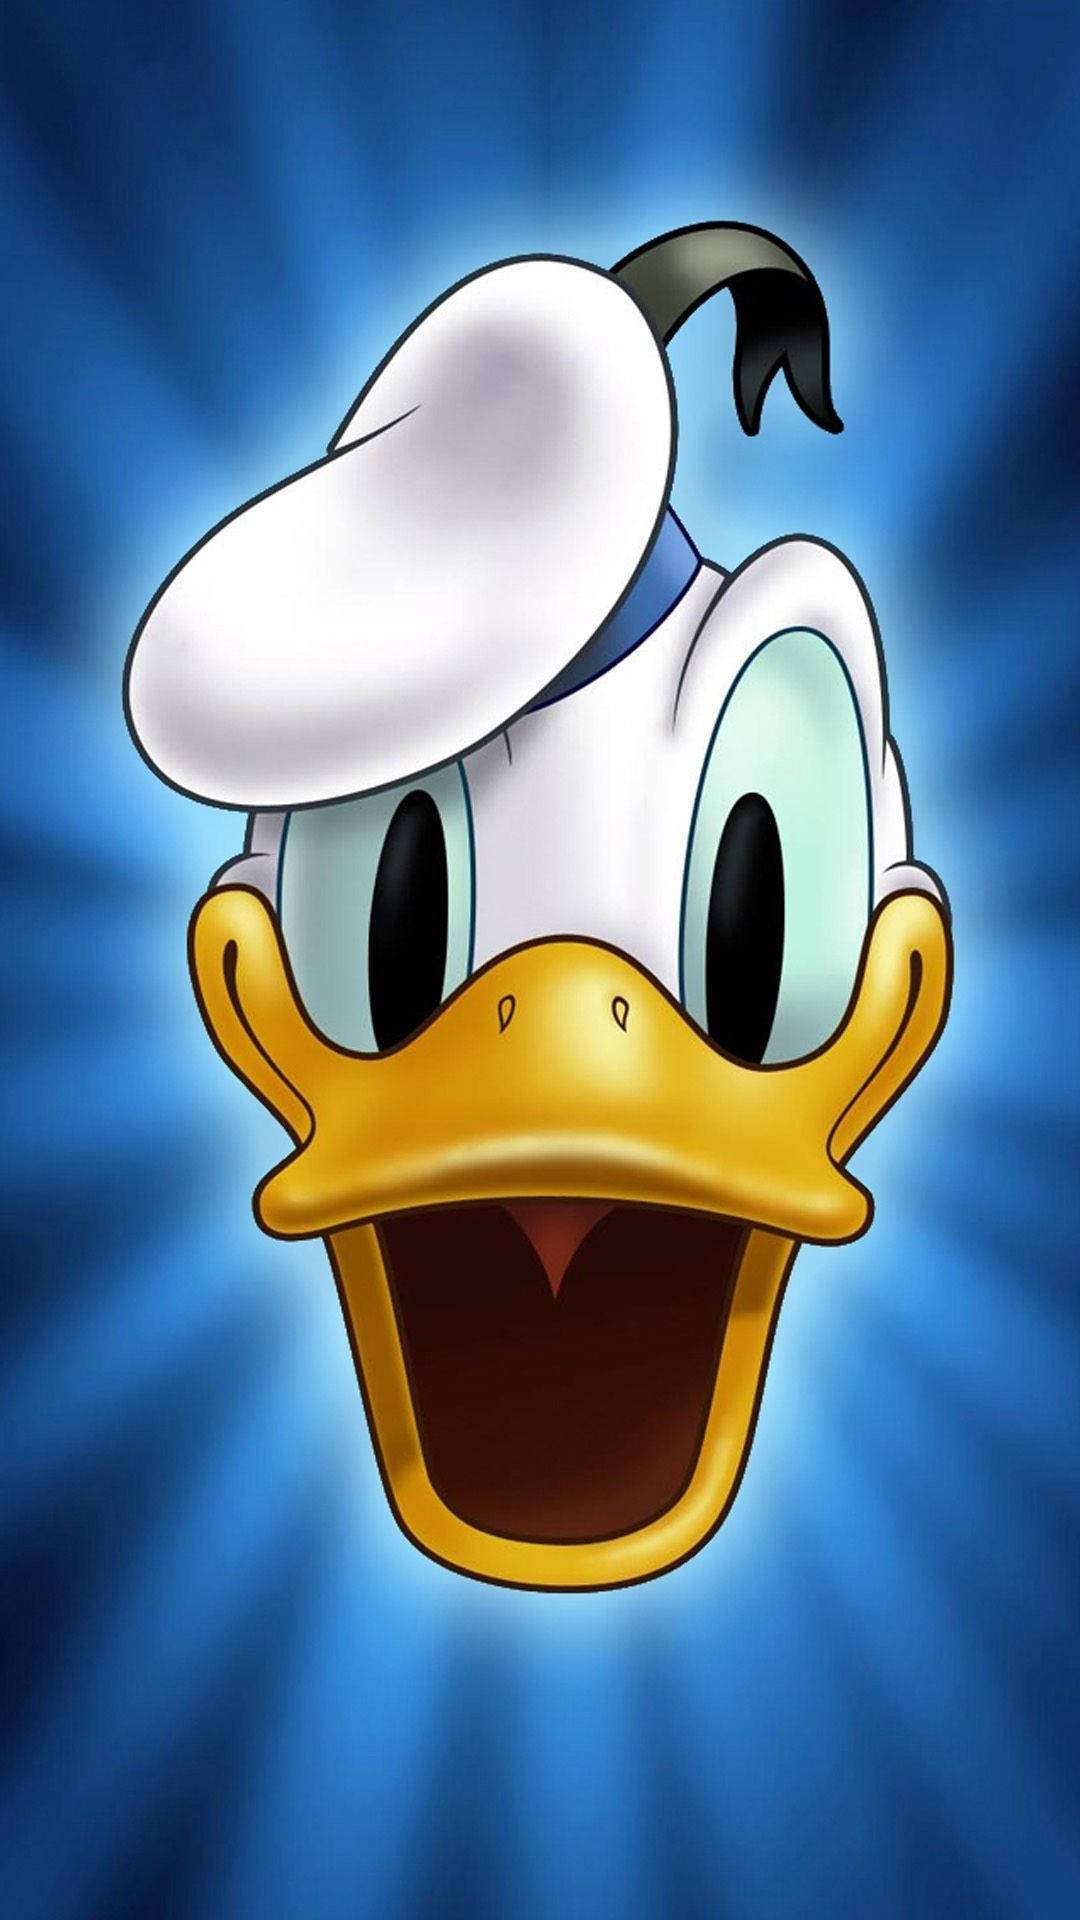 Donald Duck in a Wacky Mood Wallpaper